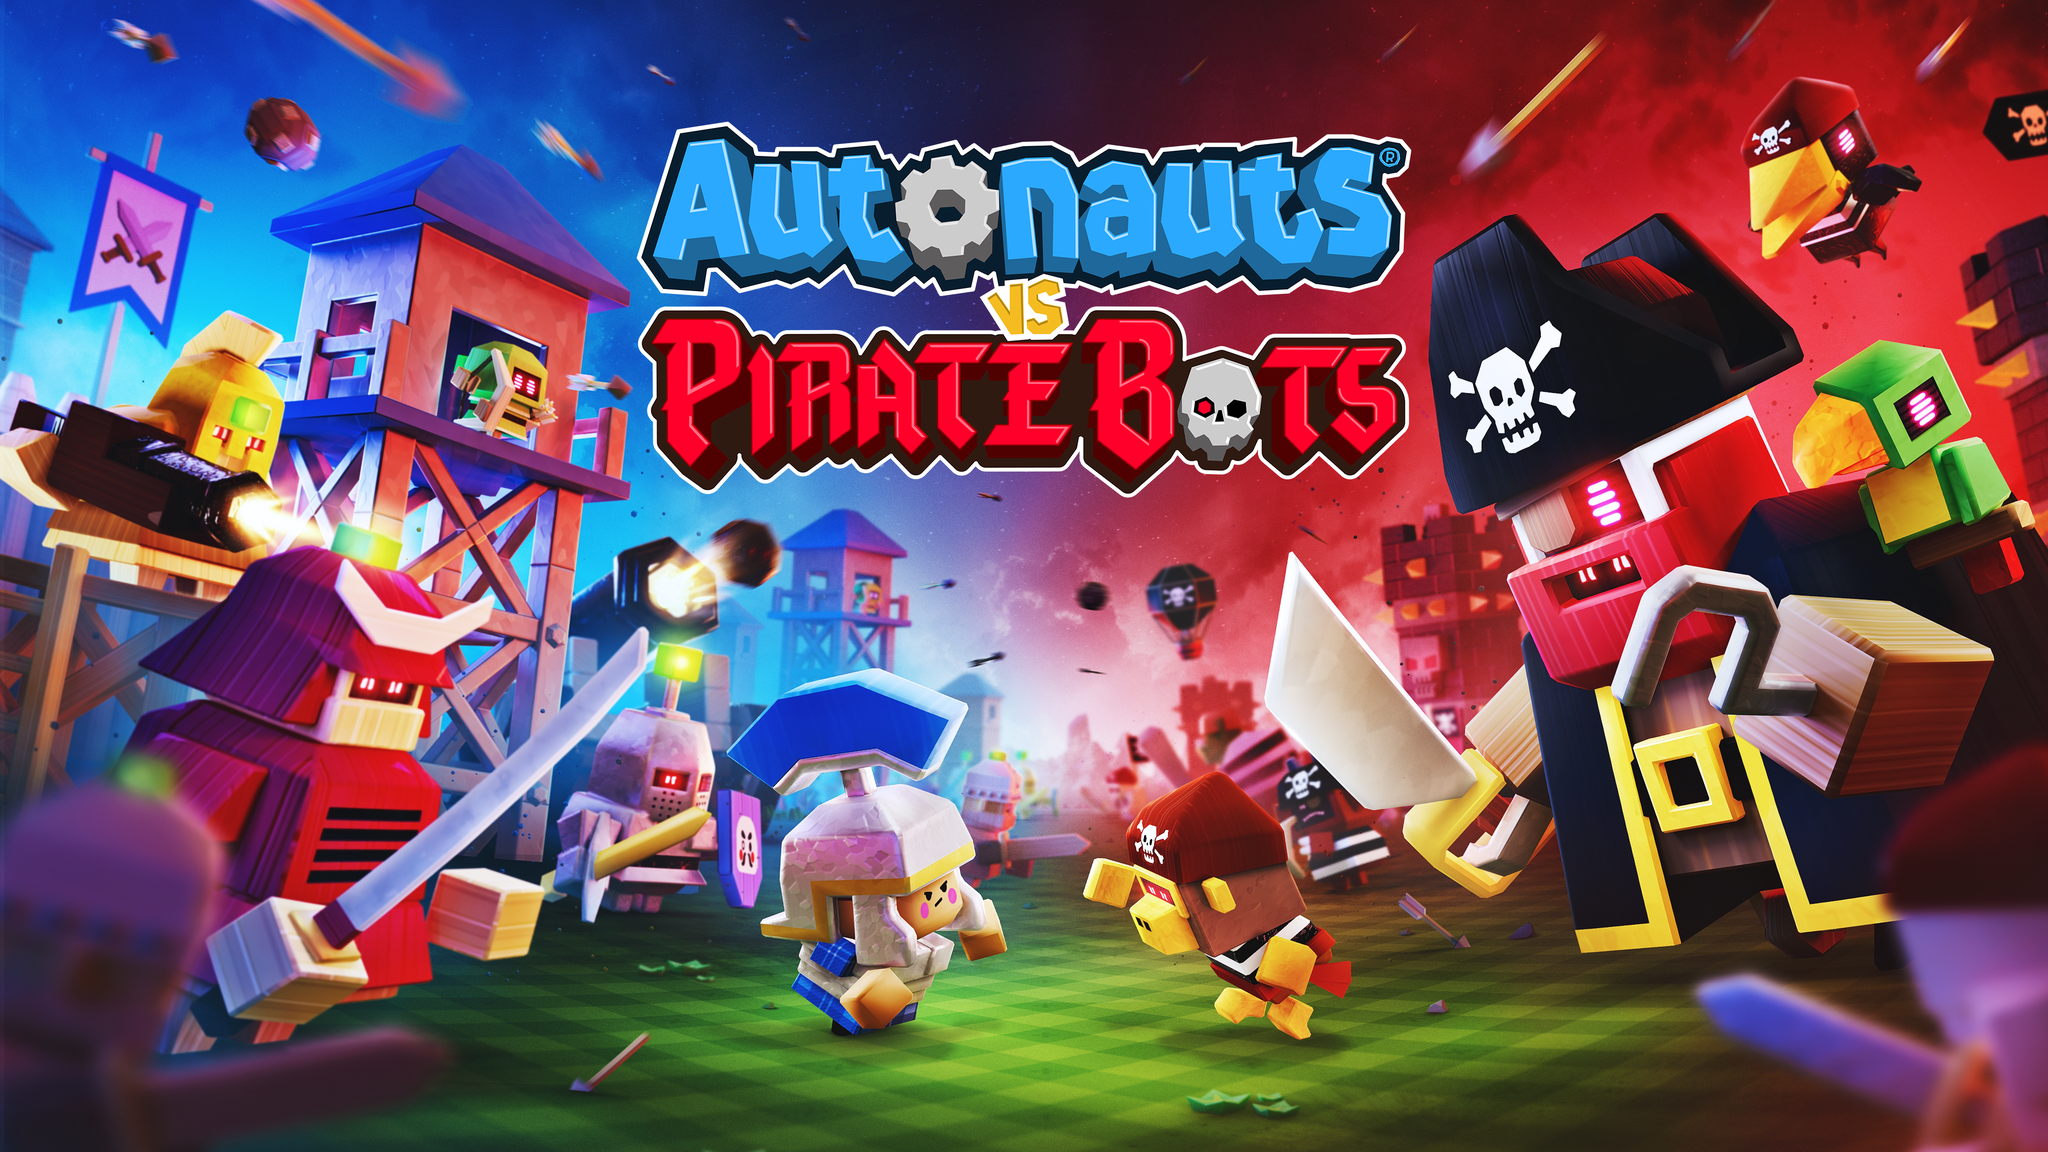 Avast New Update: Pirates Aaaaarrrr Coming To Autonauts